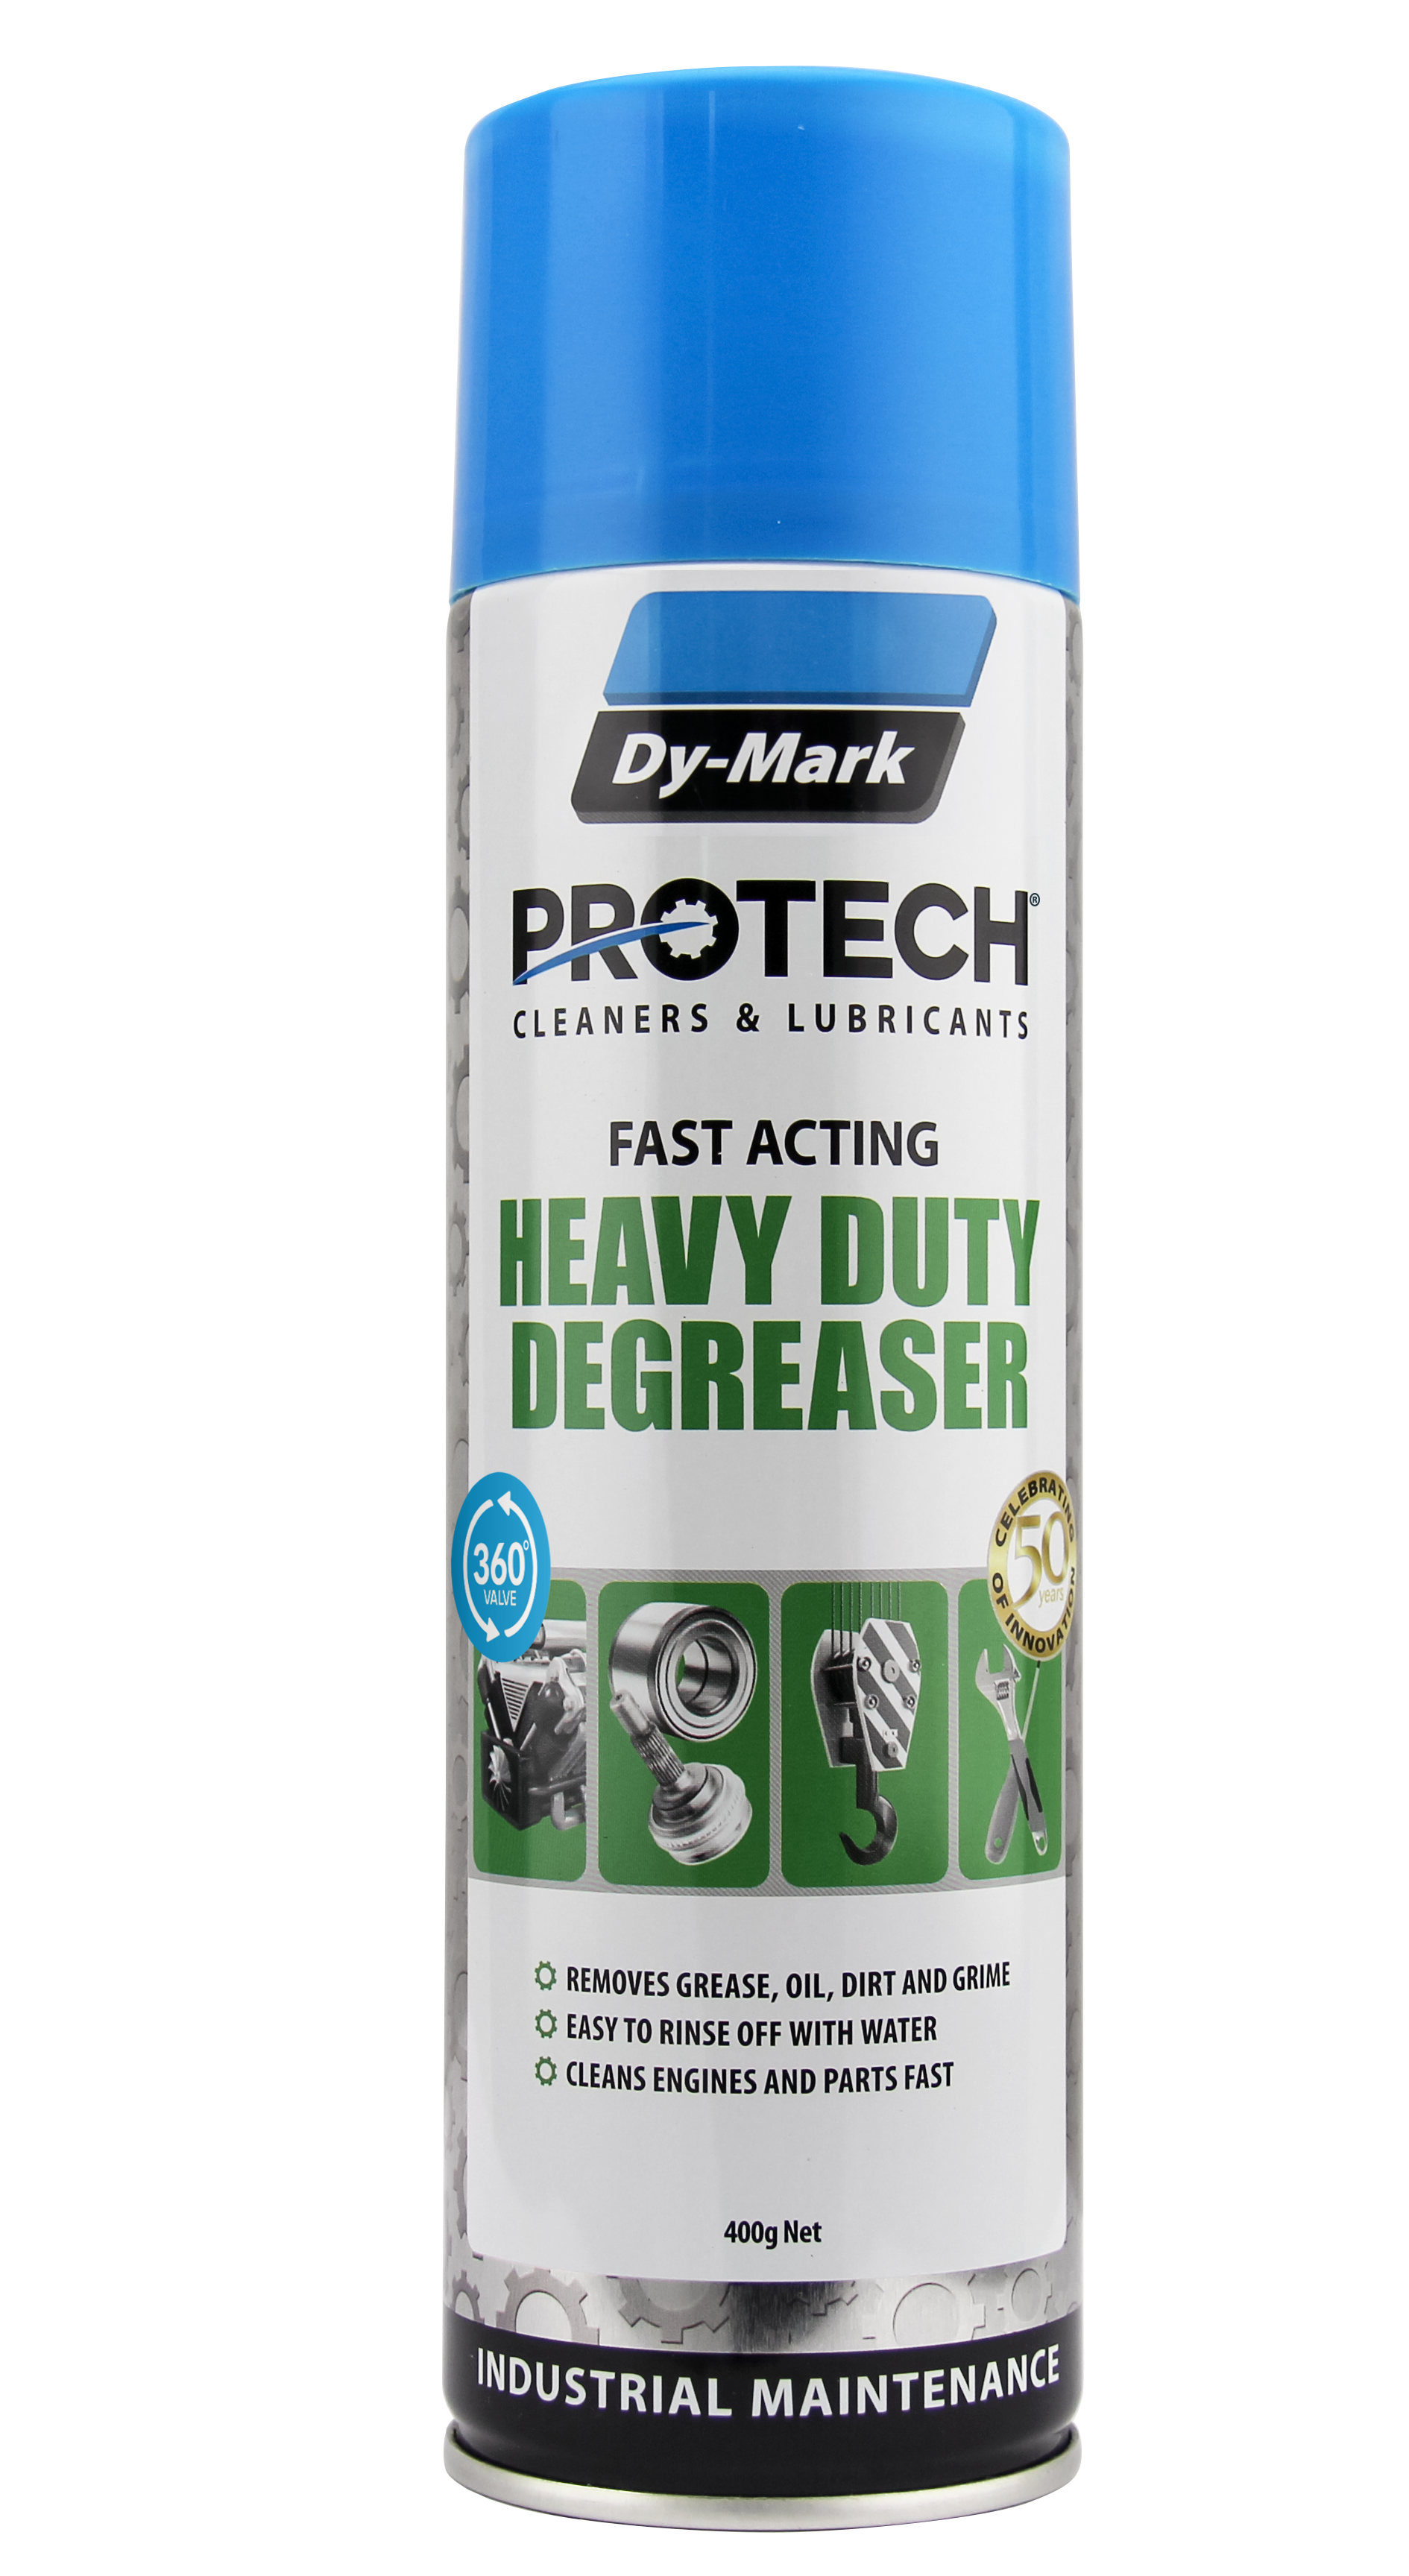 Dy-Mark Protech Heavy Duty Degreaser